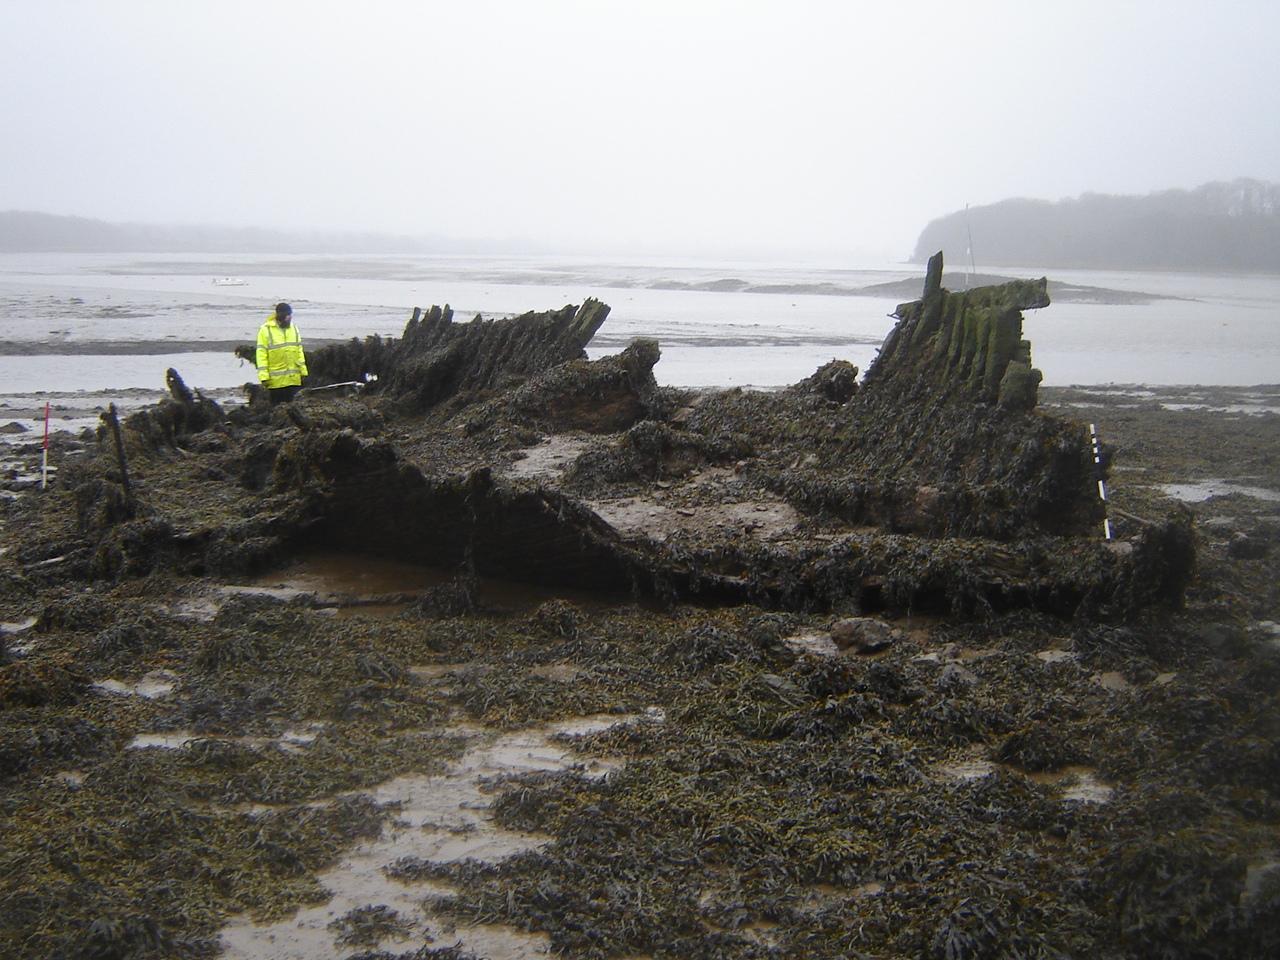 Remains of the Black Mixen Pool Wreck at Lawrenny, Pembrokeshire